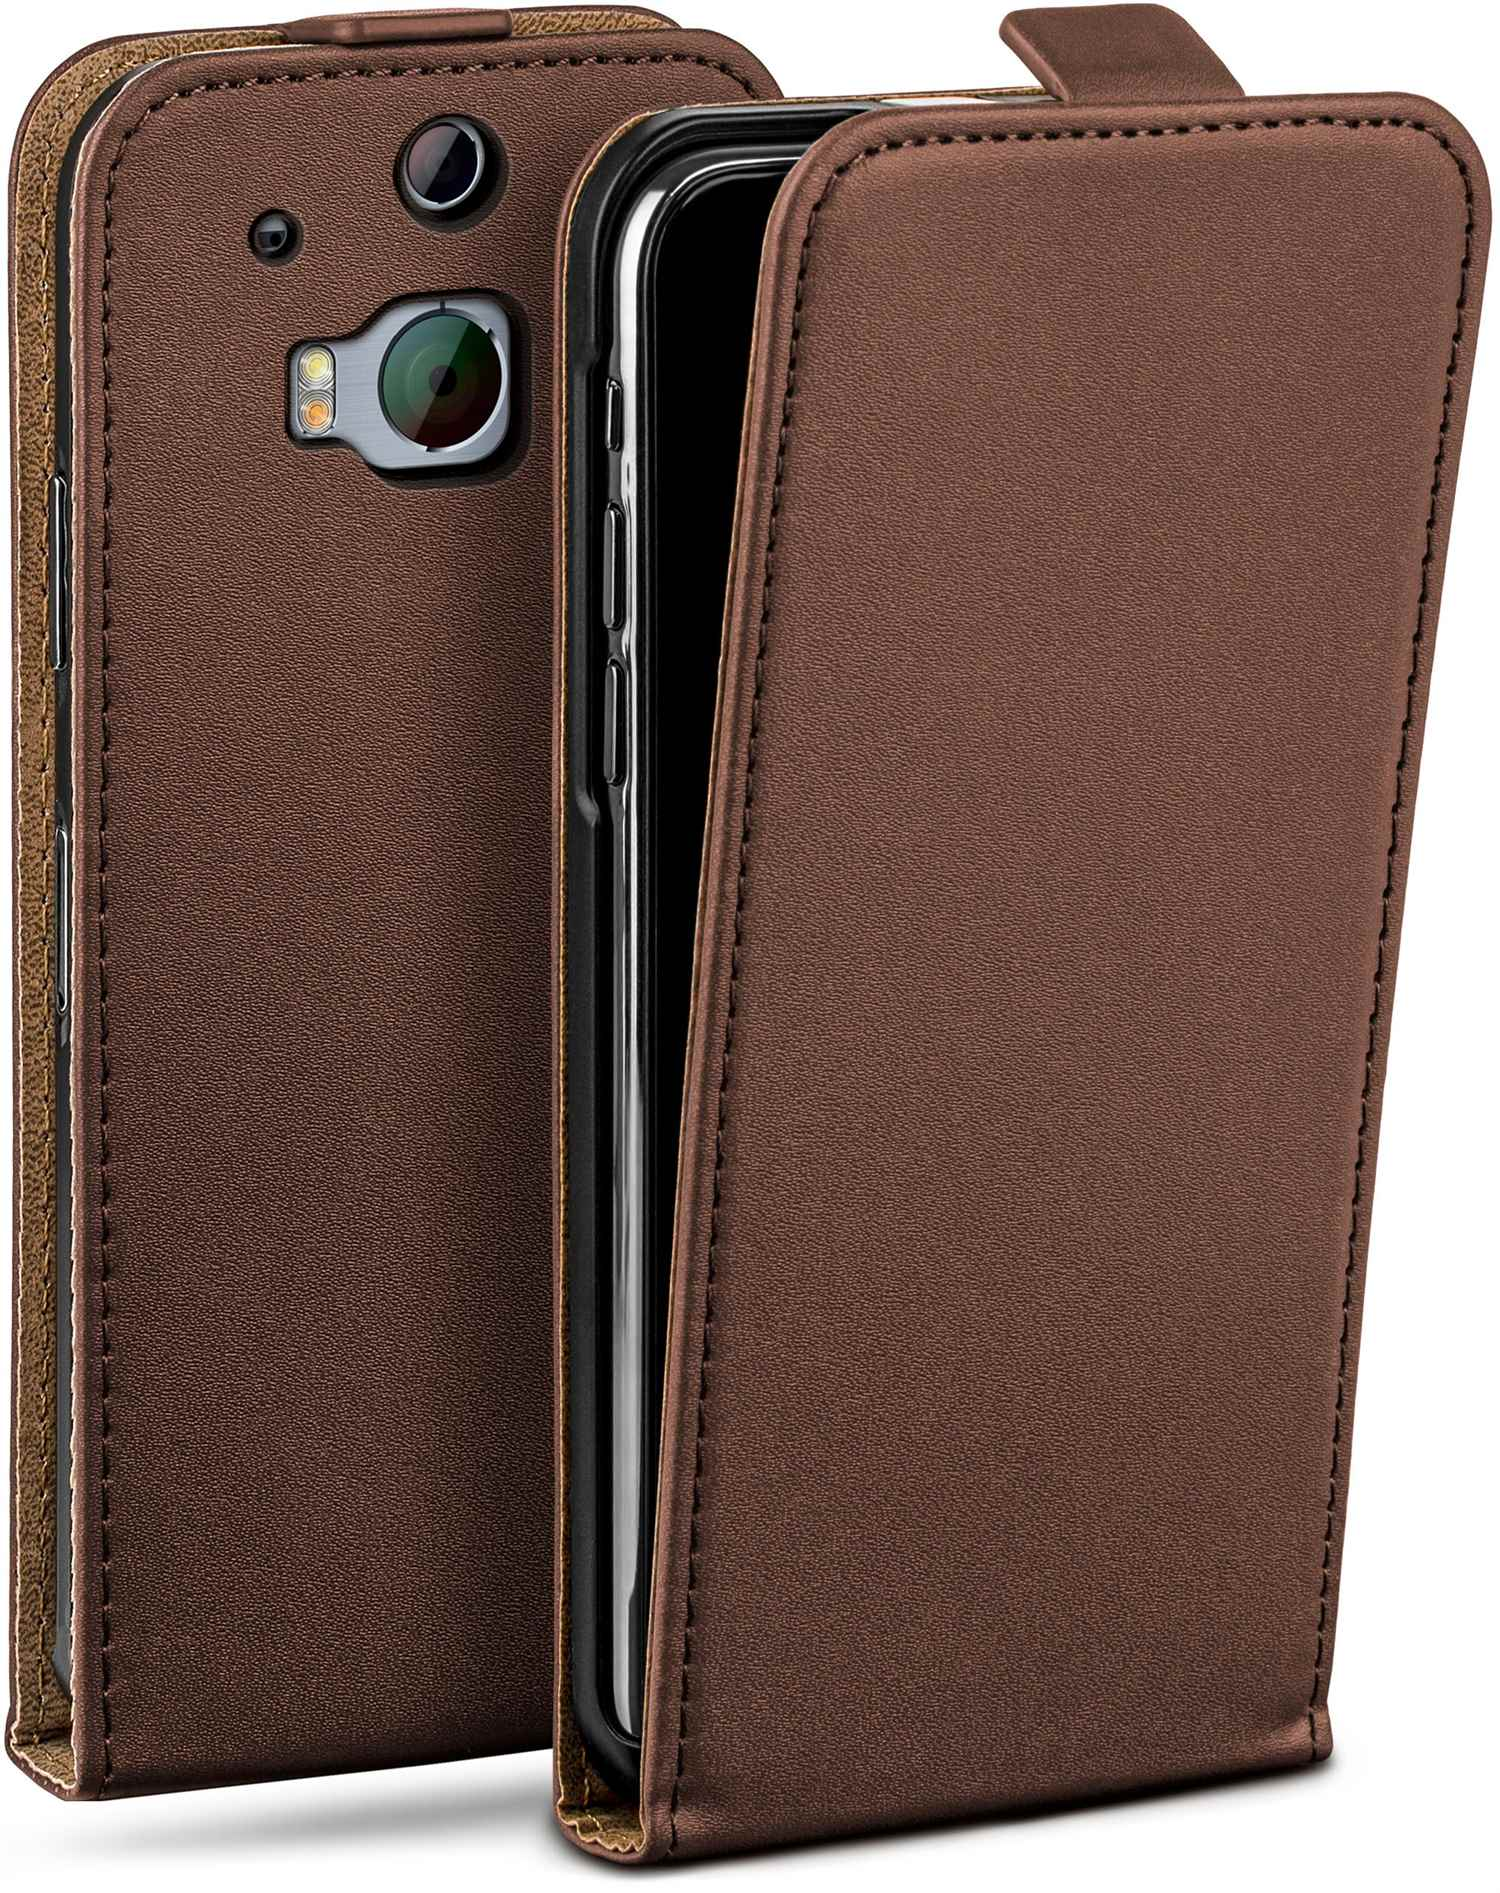 MOEX Oxide-Brown One M8s, Cover, HTC, Case, Flip Flip